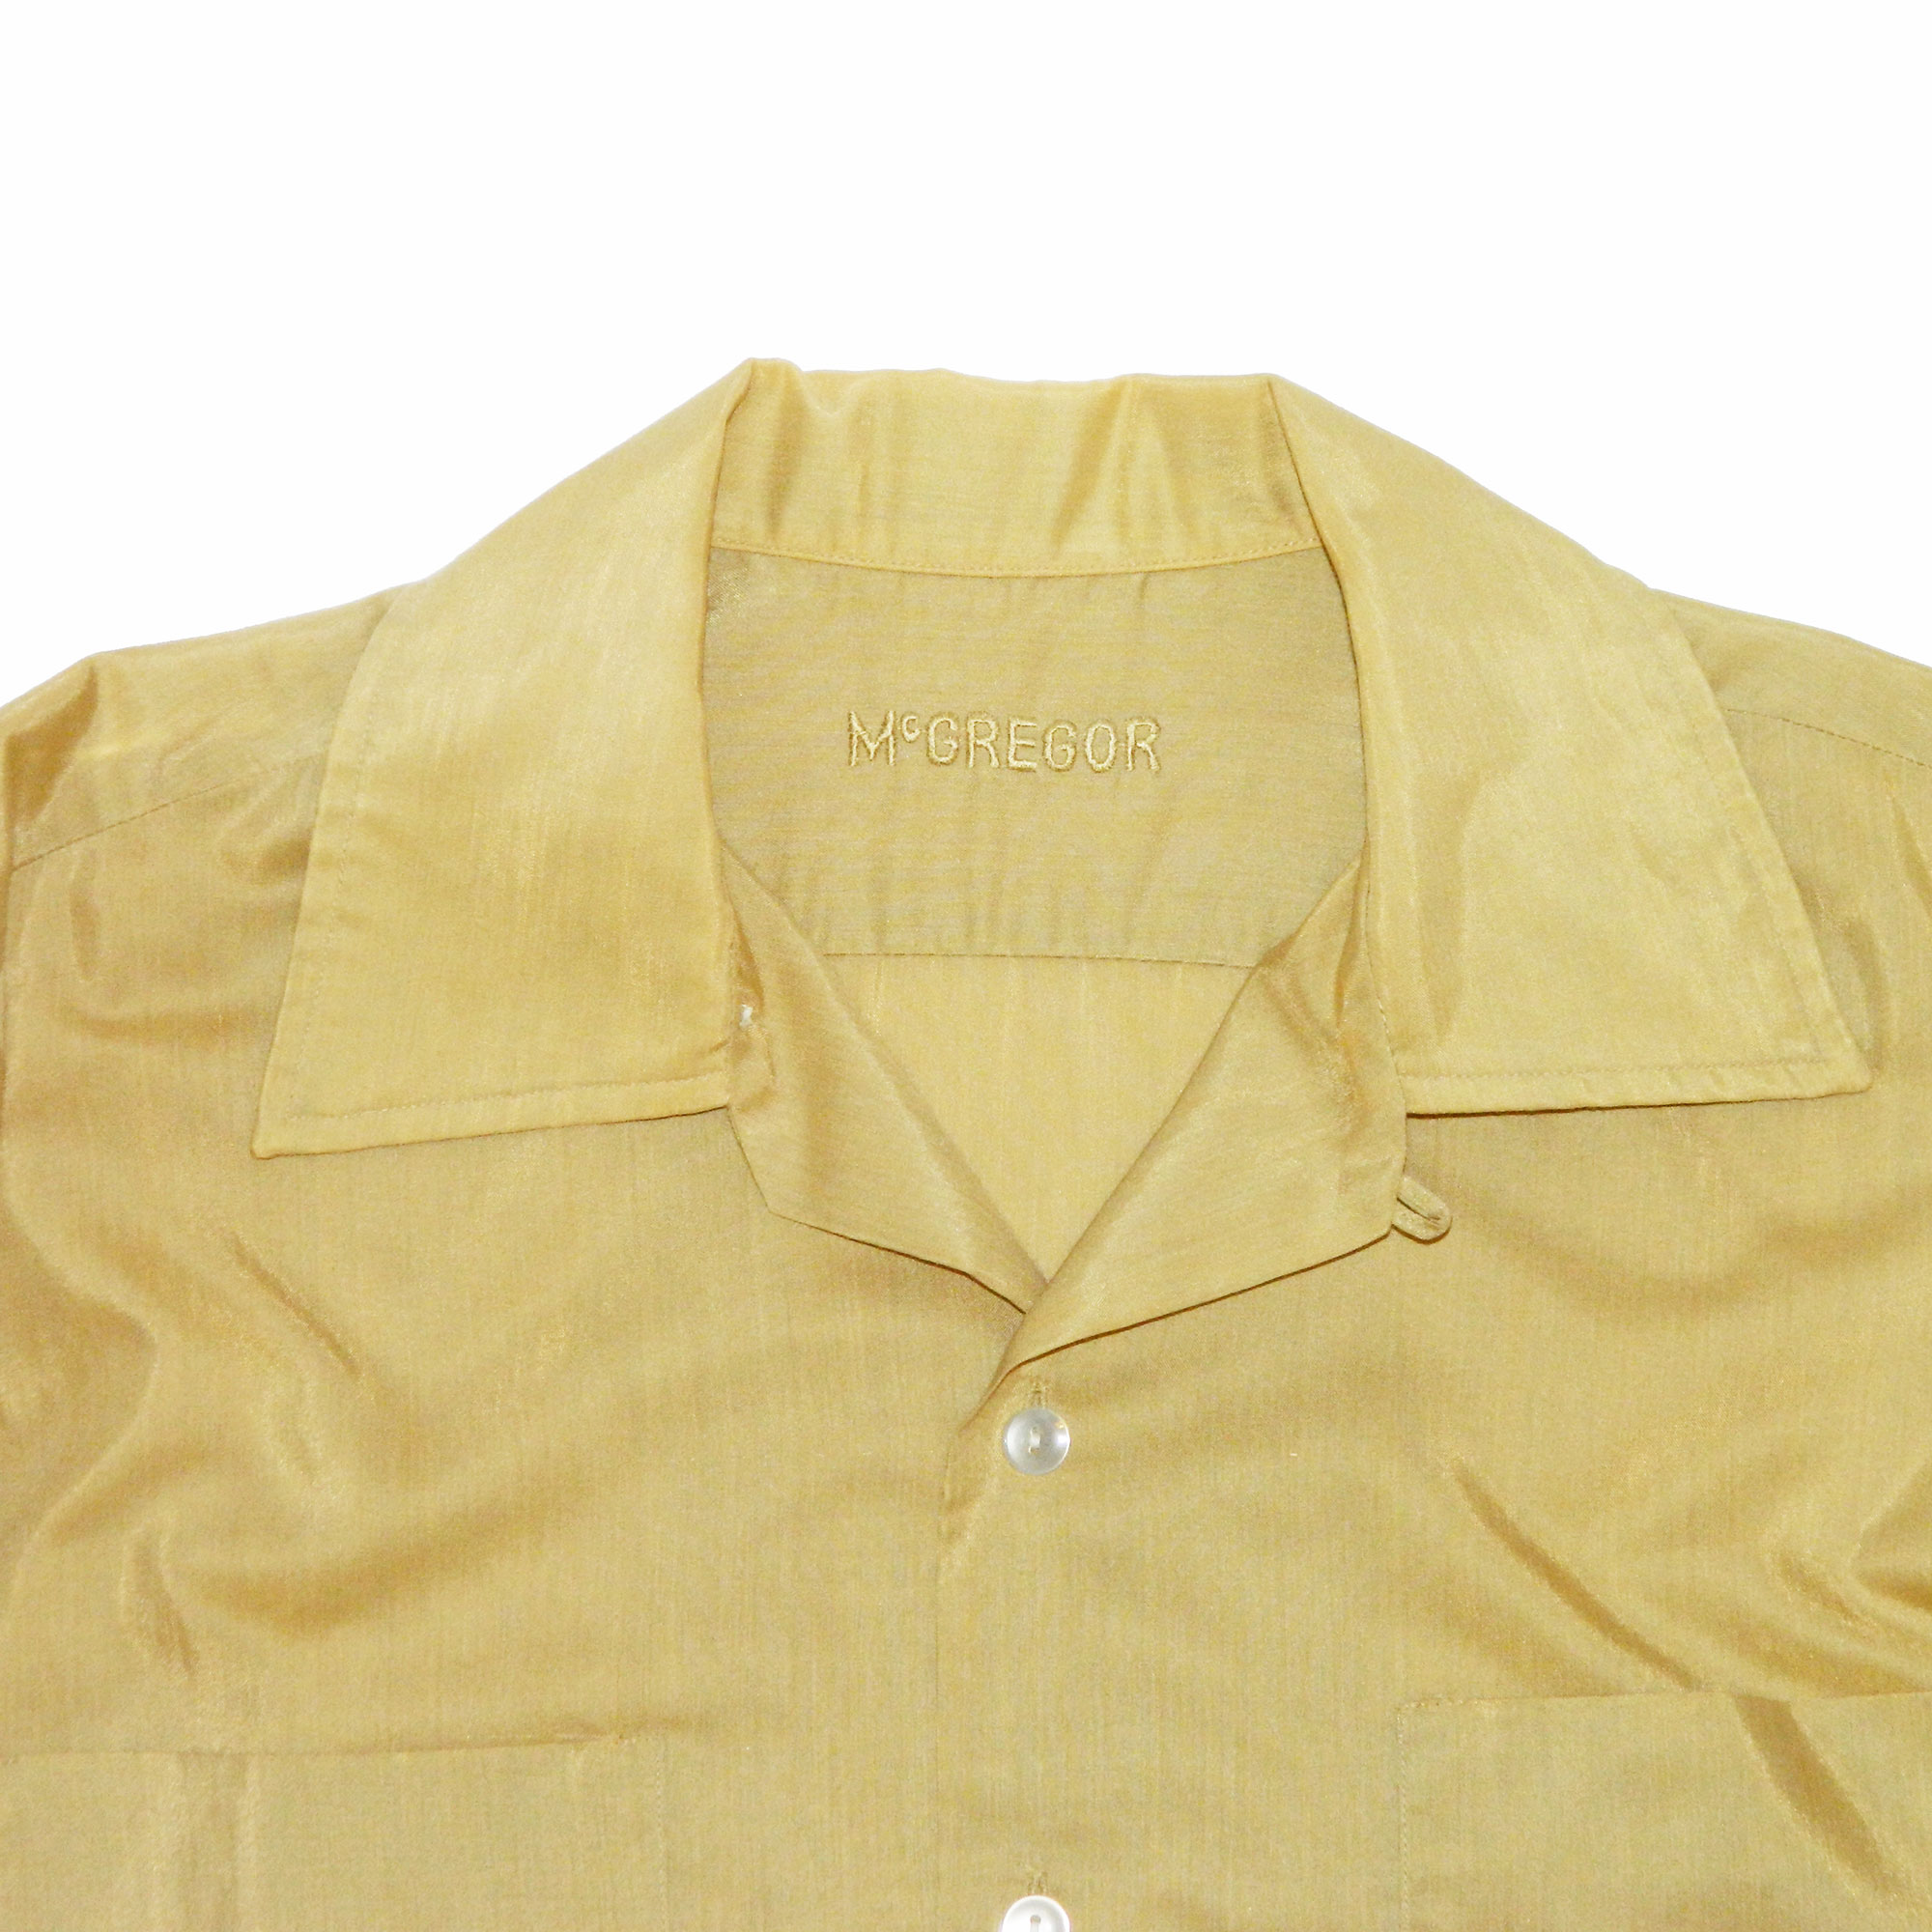 1960s long sleeve shirt